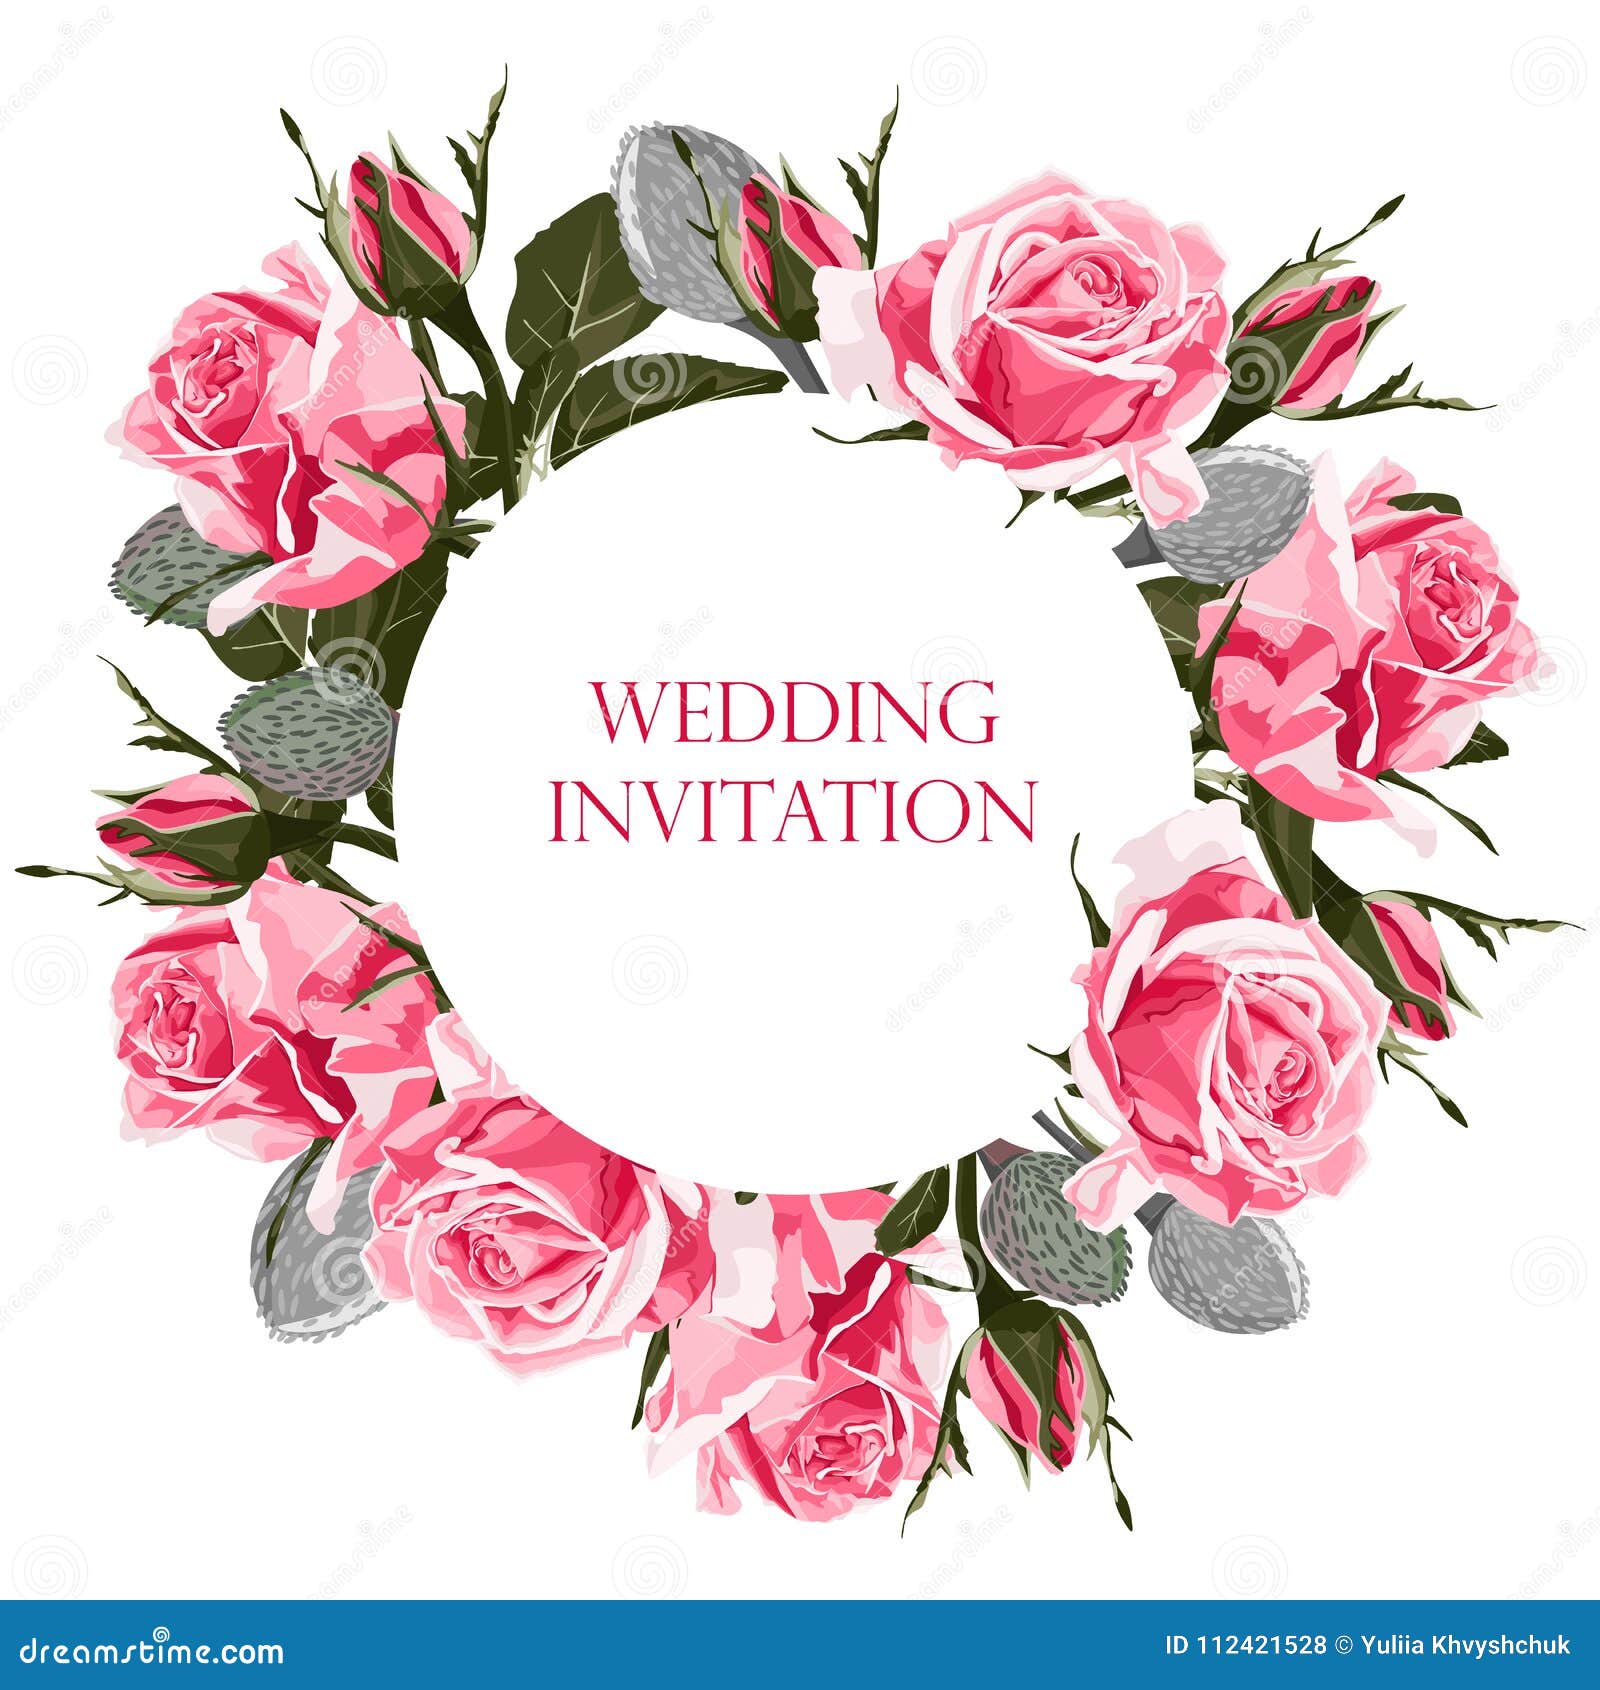 Featured image of post Convite Floral Para Editar R 2 50 r 3 61 at 12x sem juros